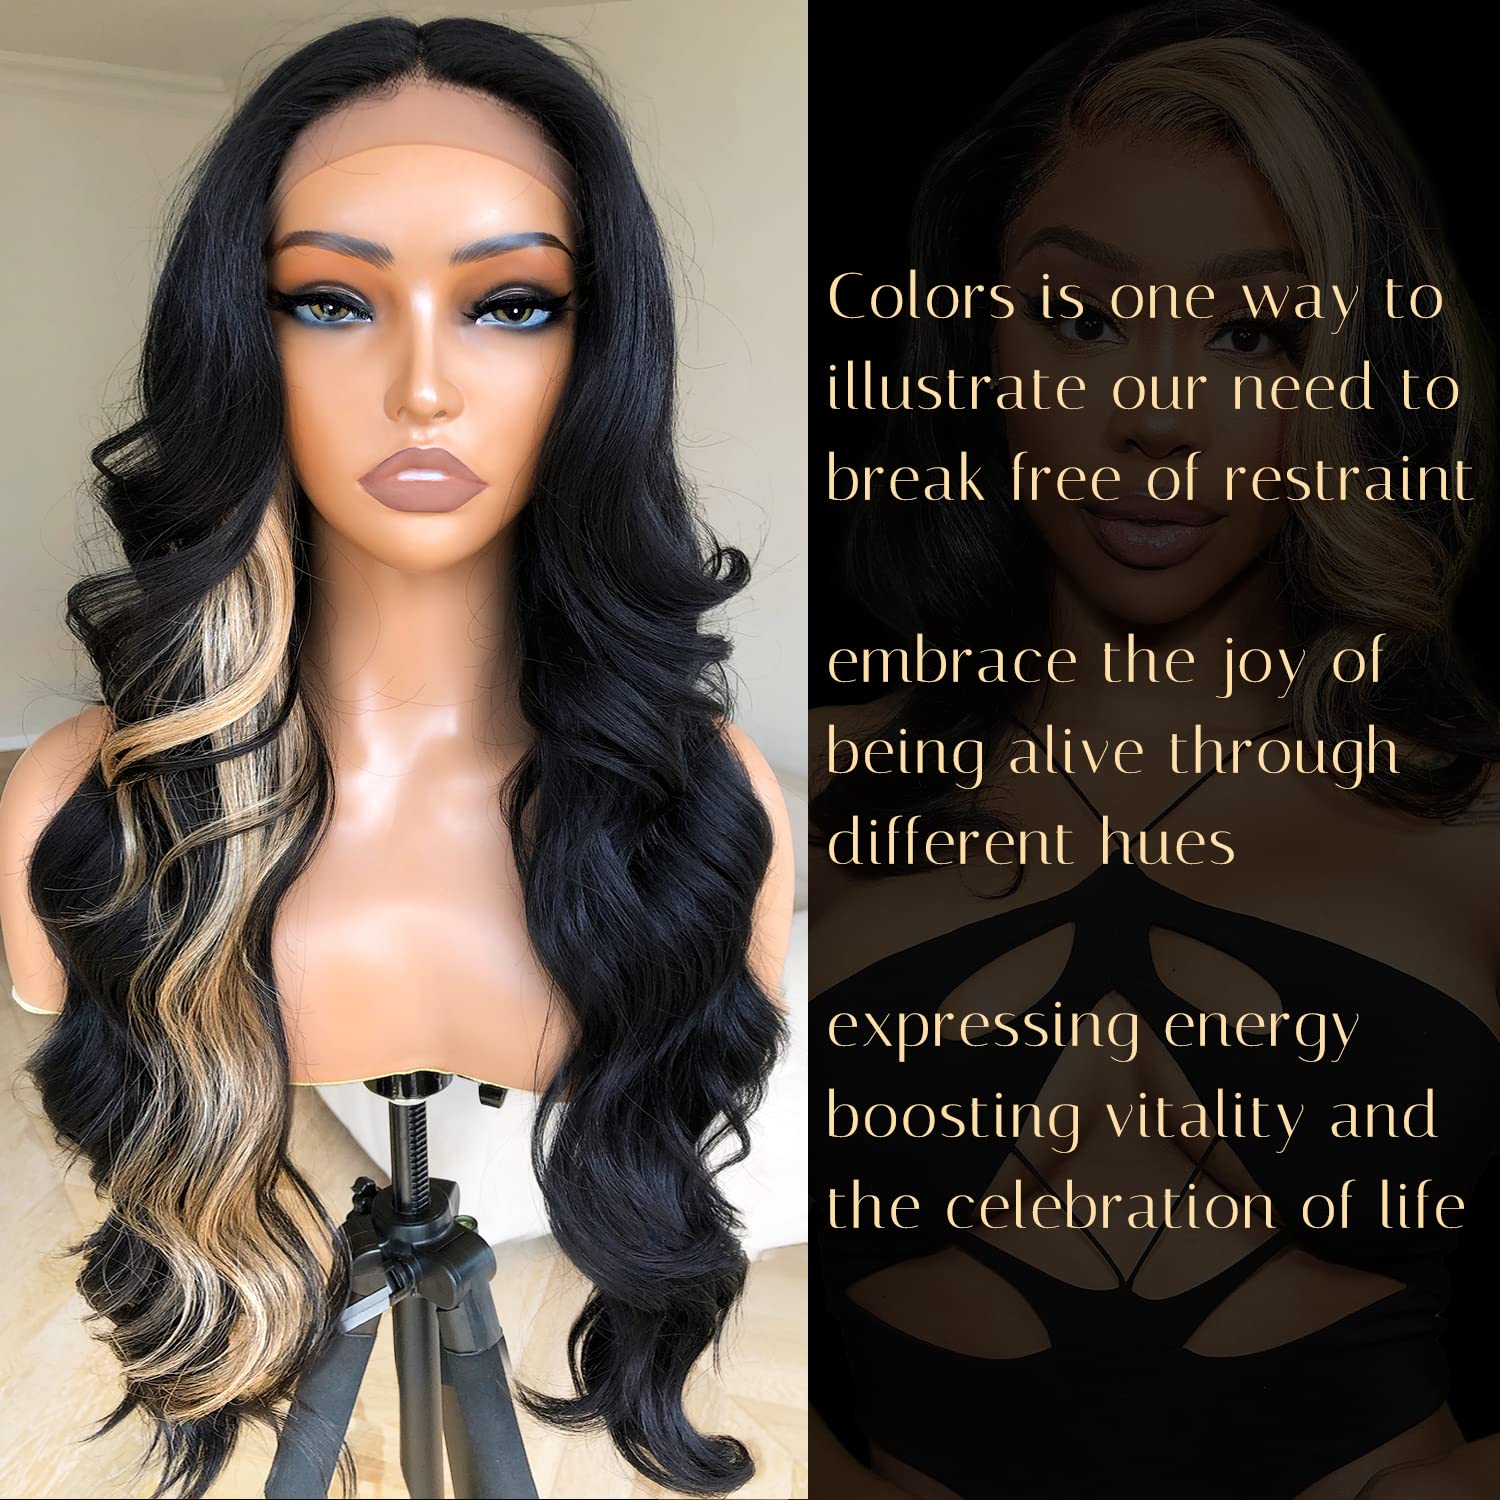 Vanlov Hair-lackSwern Skunk Strip Wigs, Blonde Skunk Strip Body Wave Lace Front Wigs Pre Plucked, Glueless Lace Wigs for Black Women